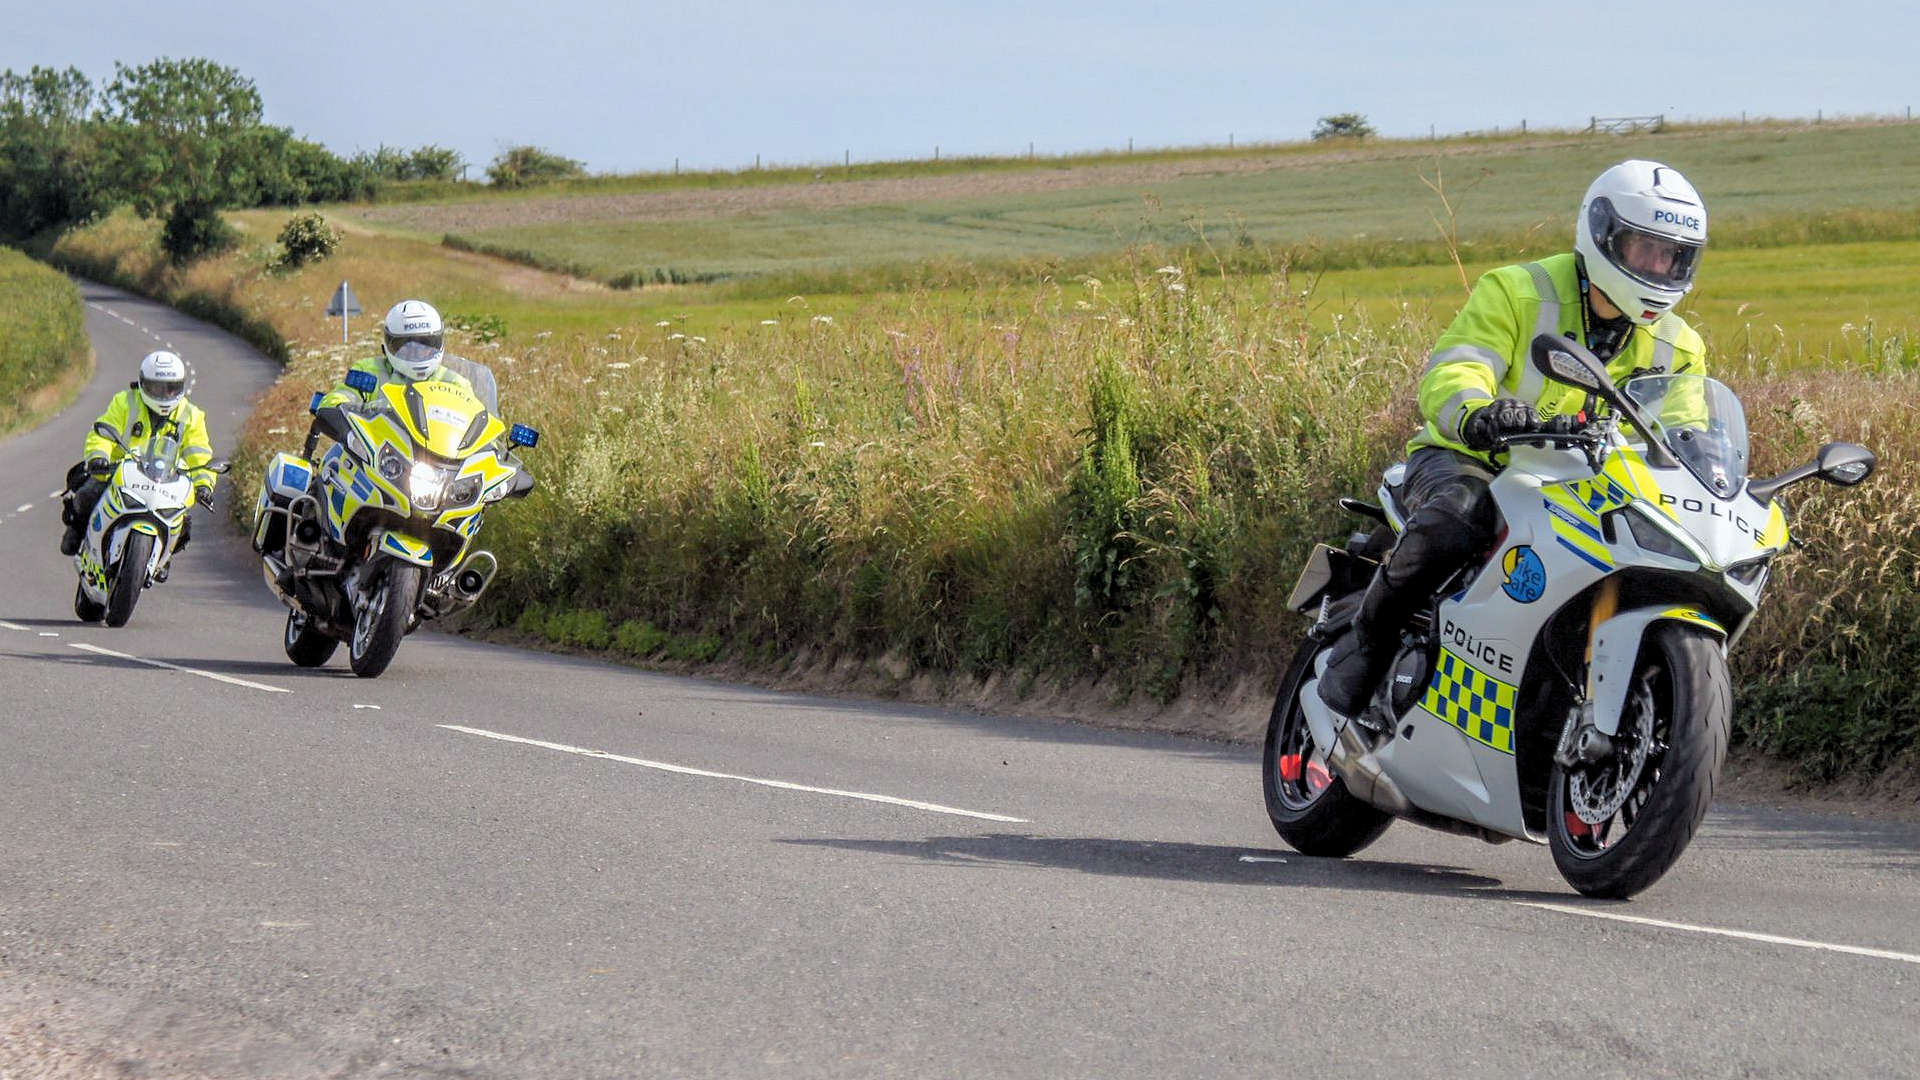 Hertfordshire Constabulary BikeSafe team police motorcyclists